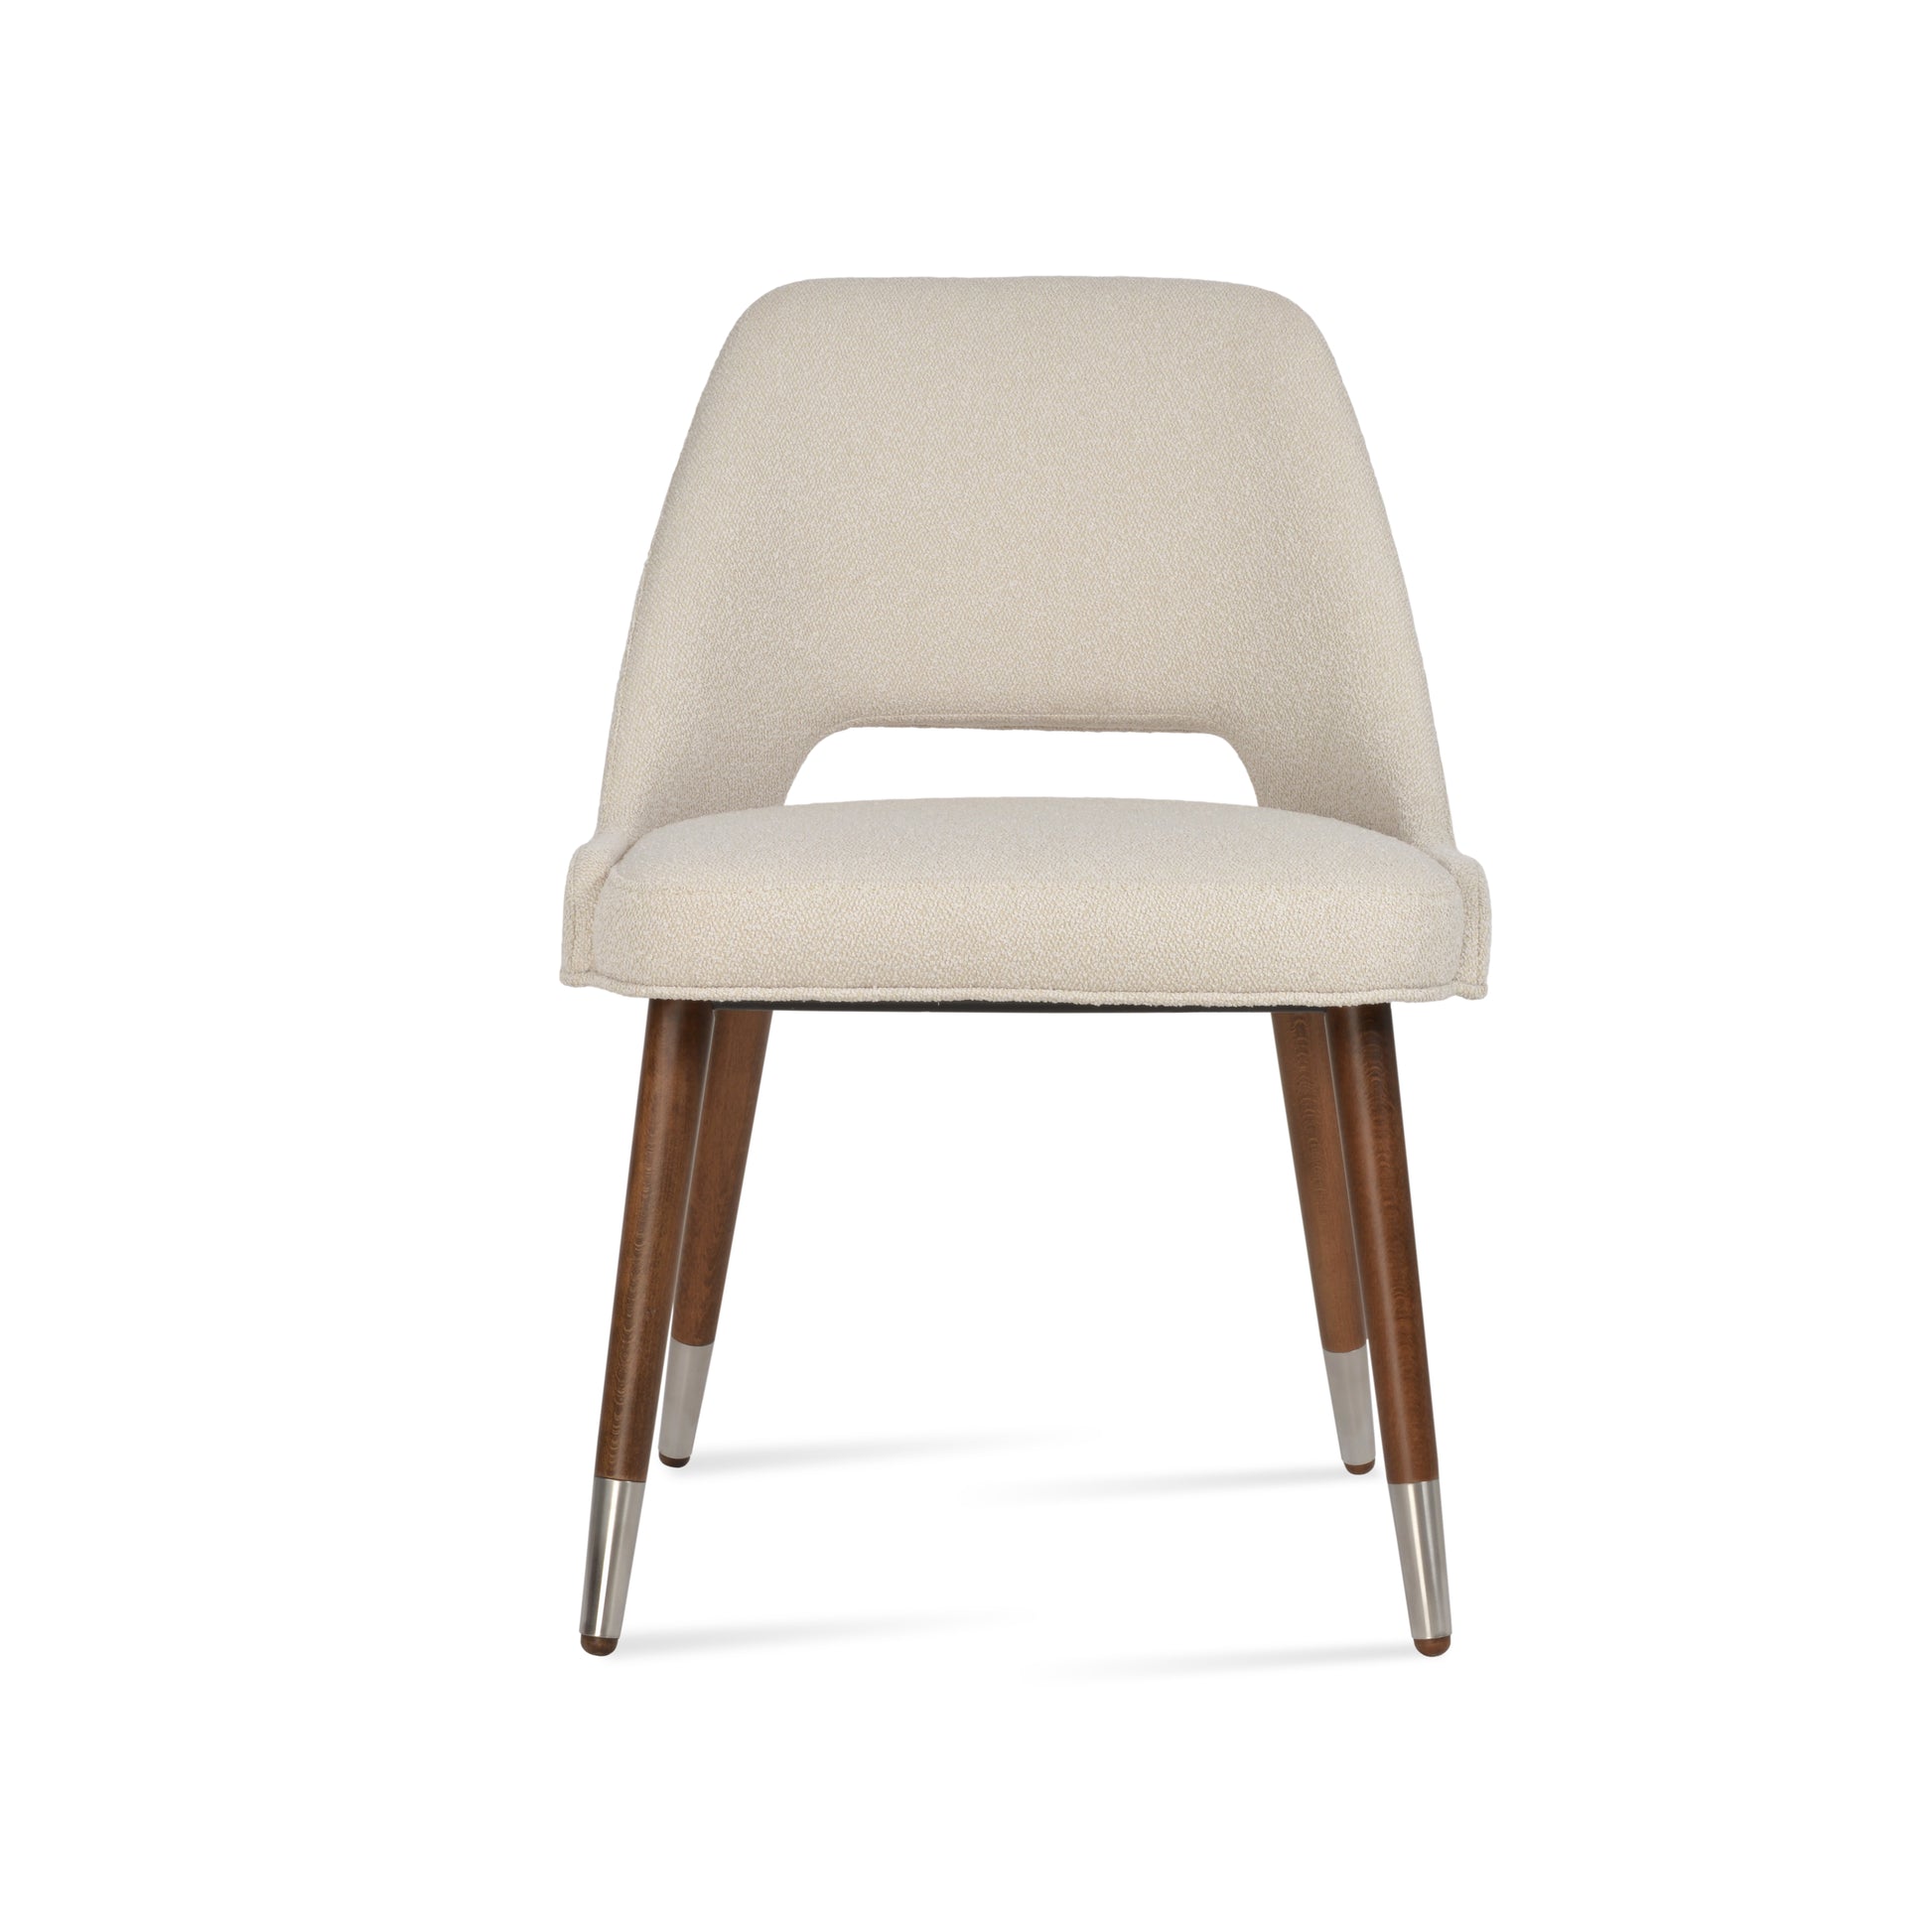 Versatile Dining Chair - Marash Wood with Walnut Base"